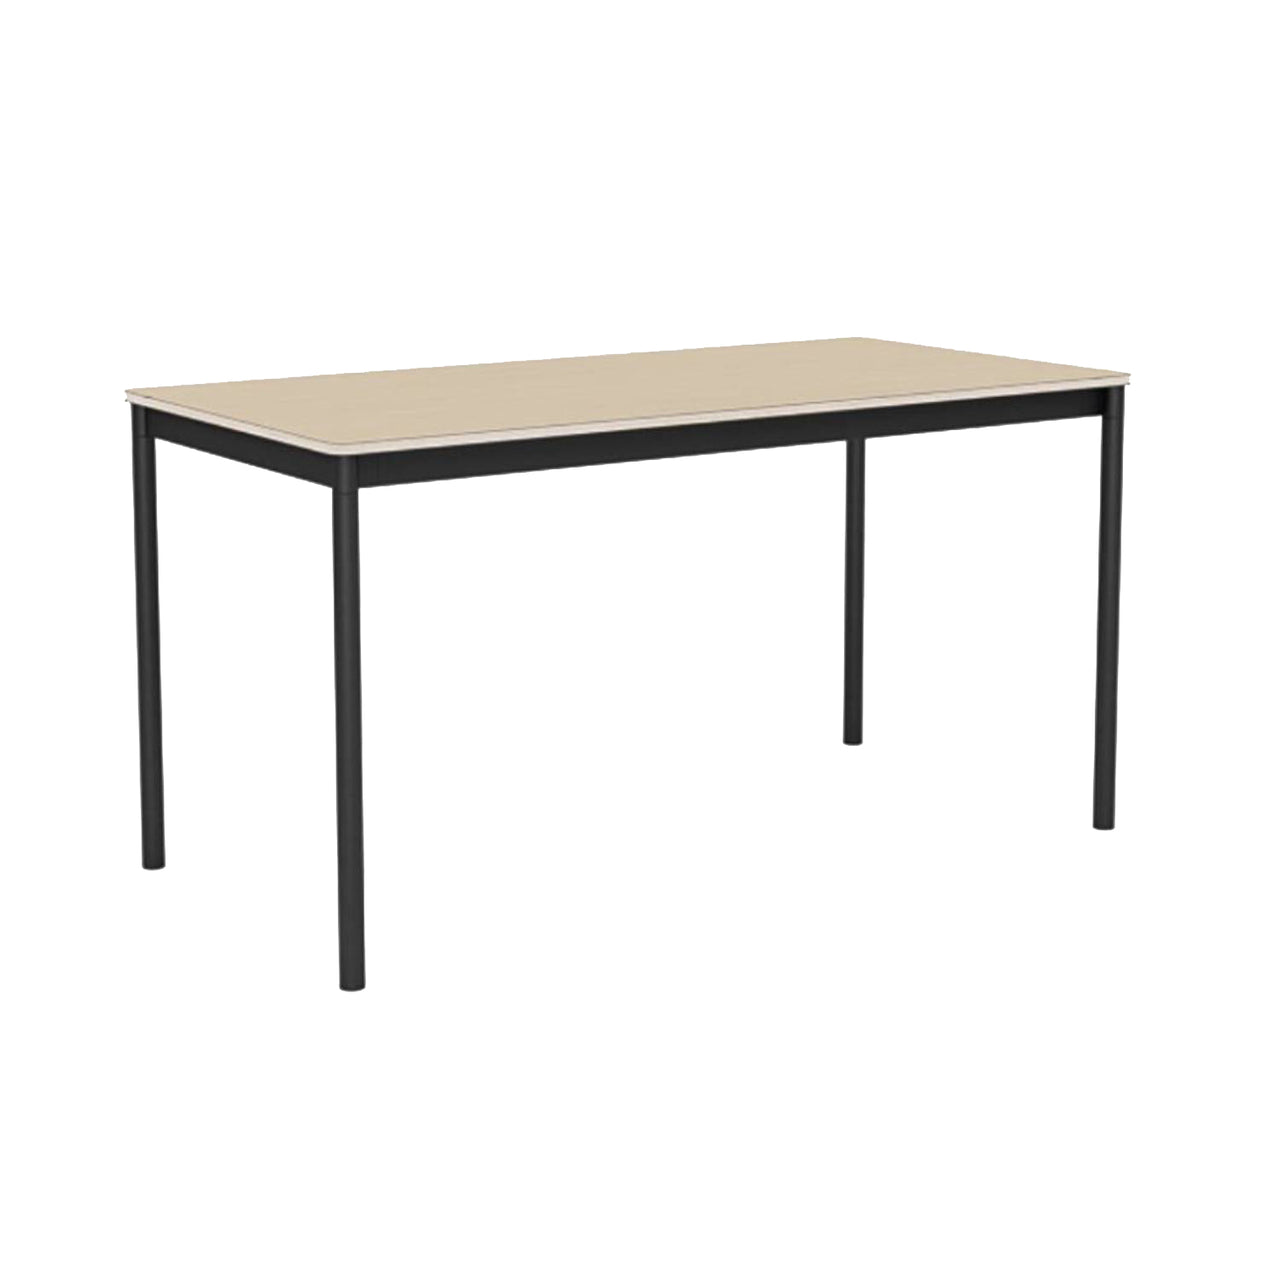 Base Table: Small + 55.1